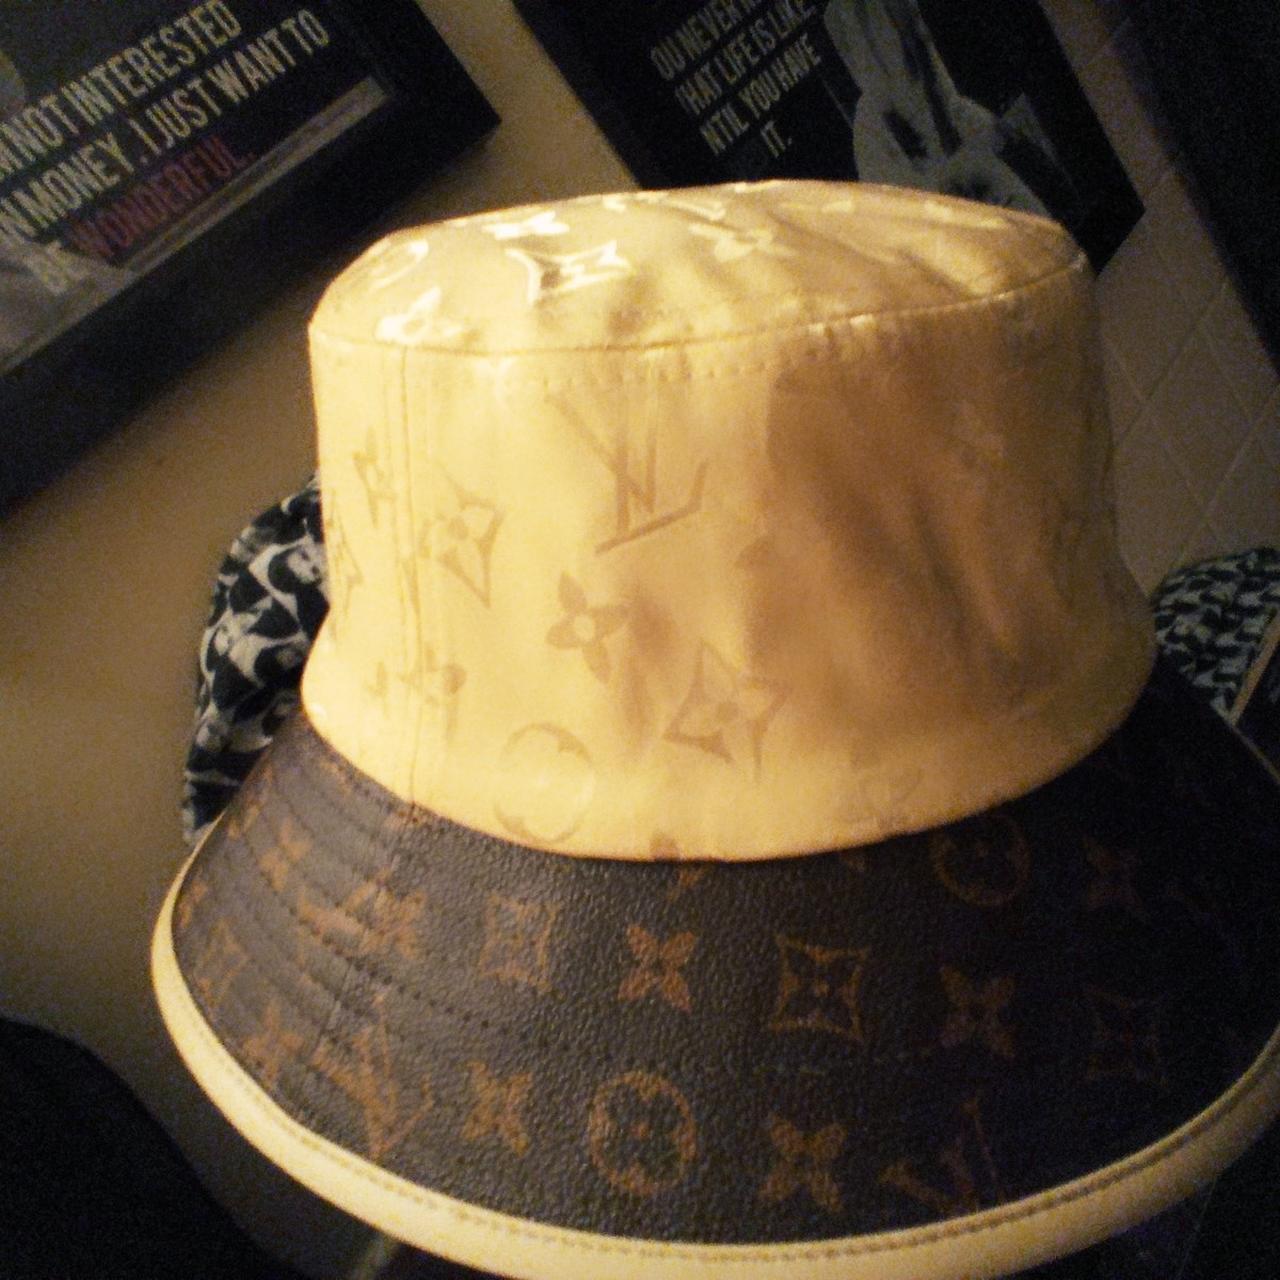 Corduroy Louis Vuitton bucket hat! Made from a - Depop